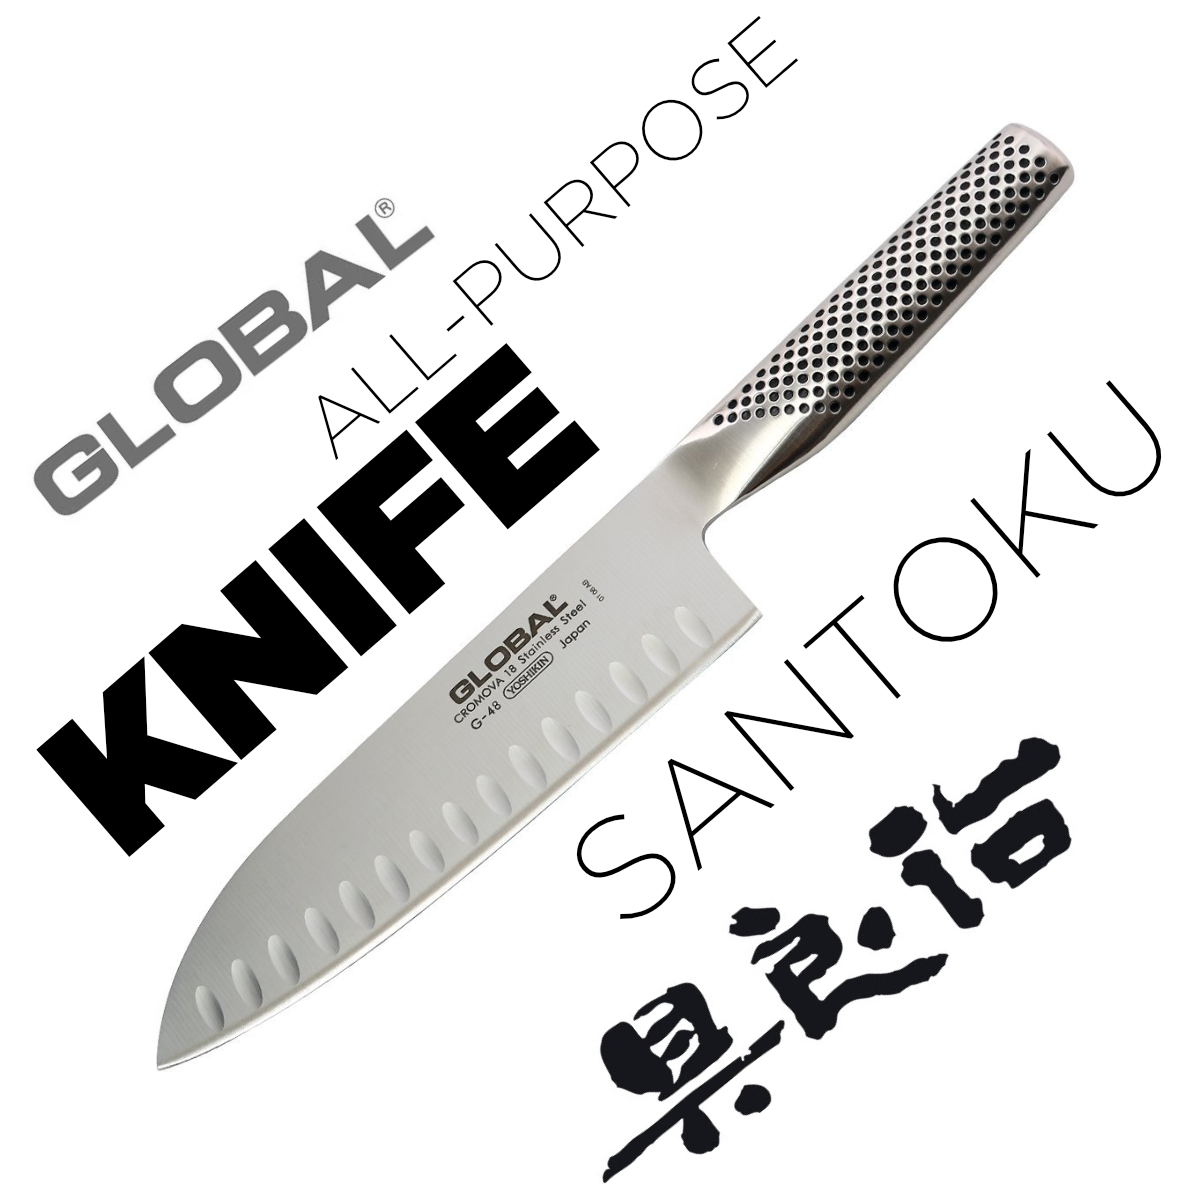 https://thejazzchef.com/wp-content/uploads/2018/01/Global-G-48-Santoku-Knife.png